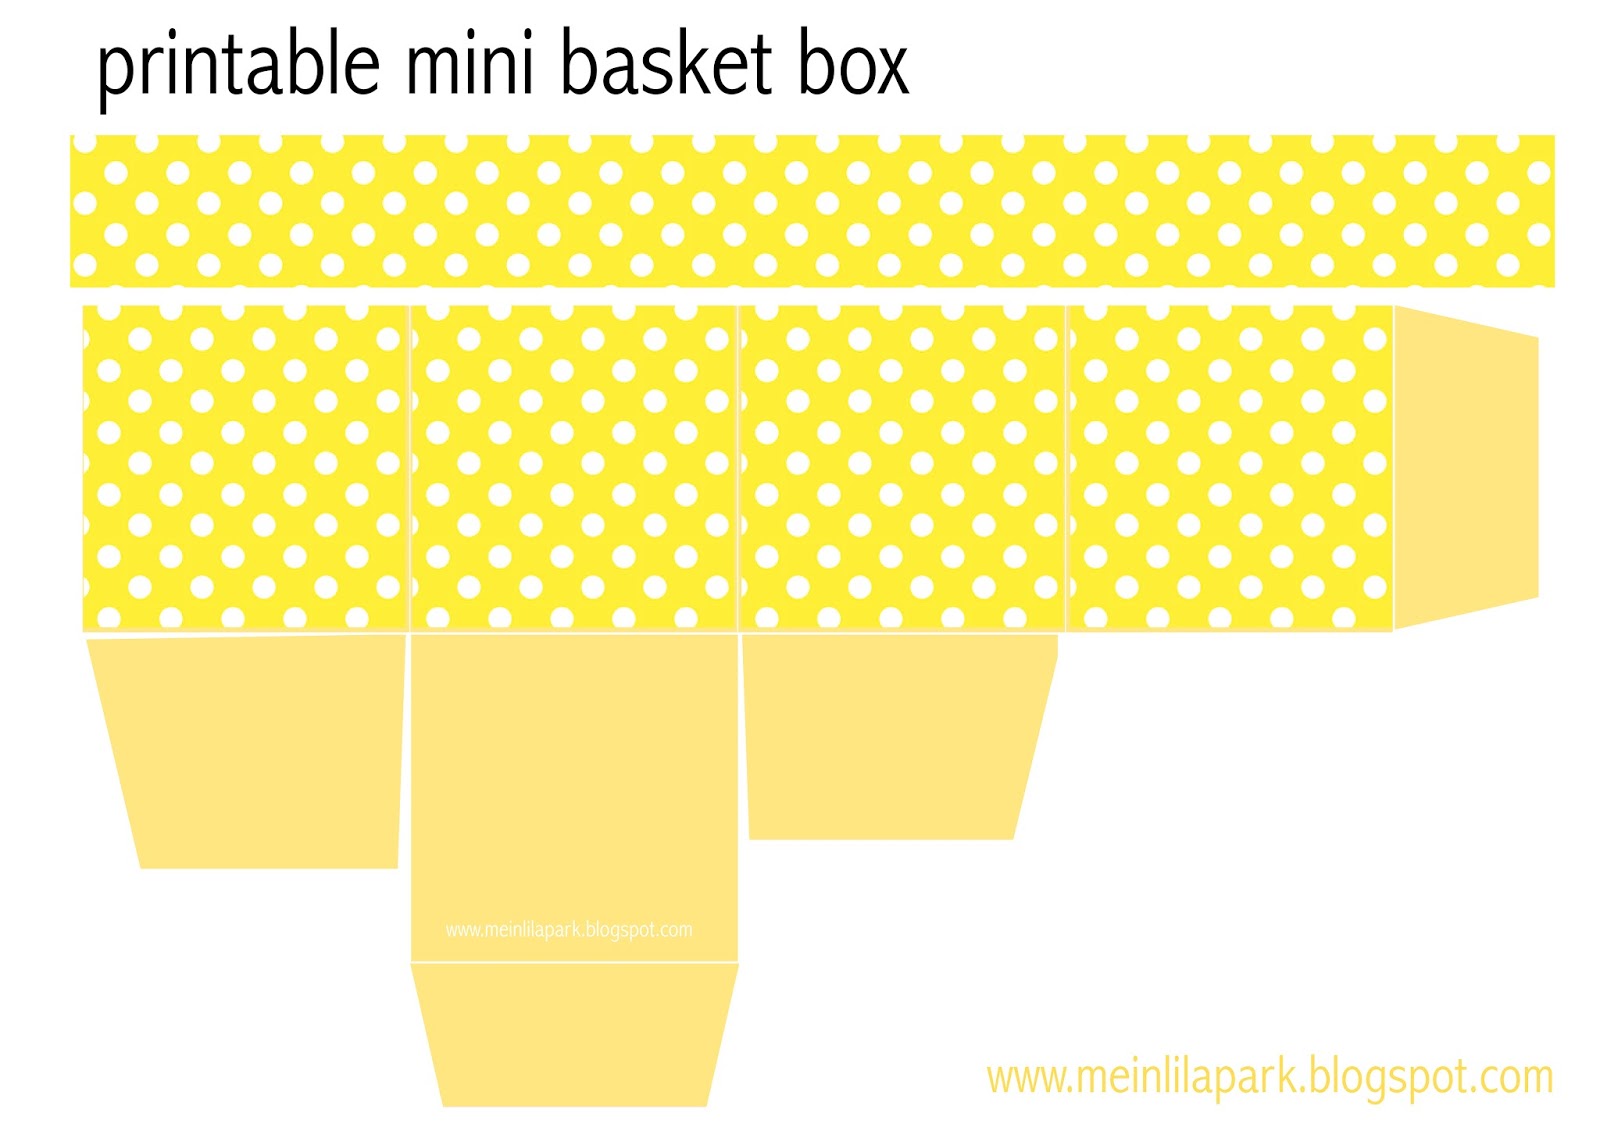 free-printable-mini-easter-basket-ausdruckbarer-osterkorb-freebie-meinlilapark